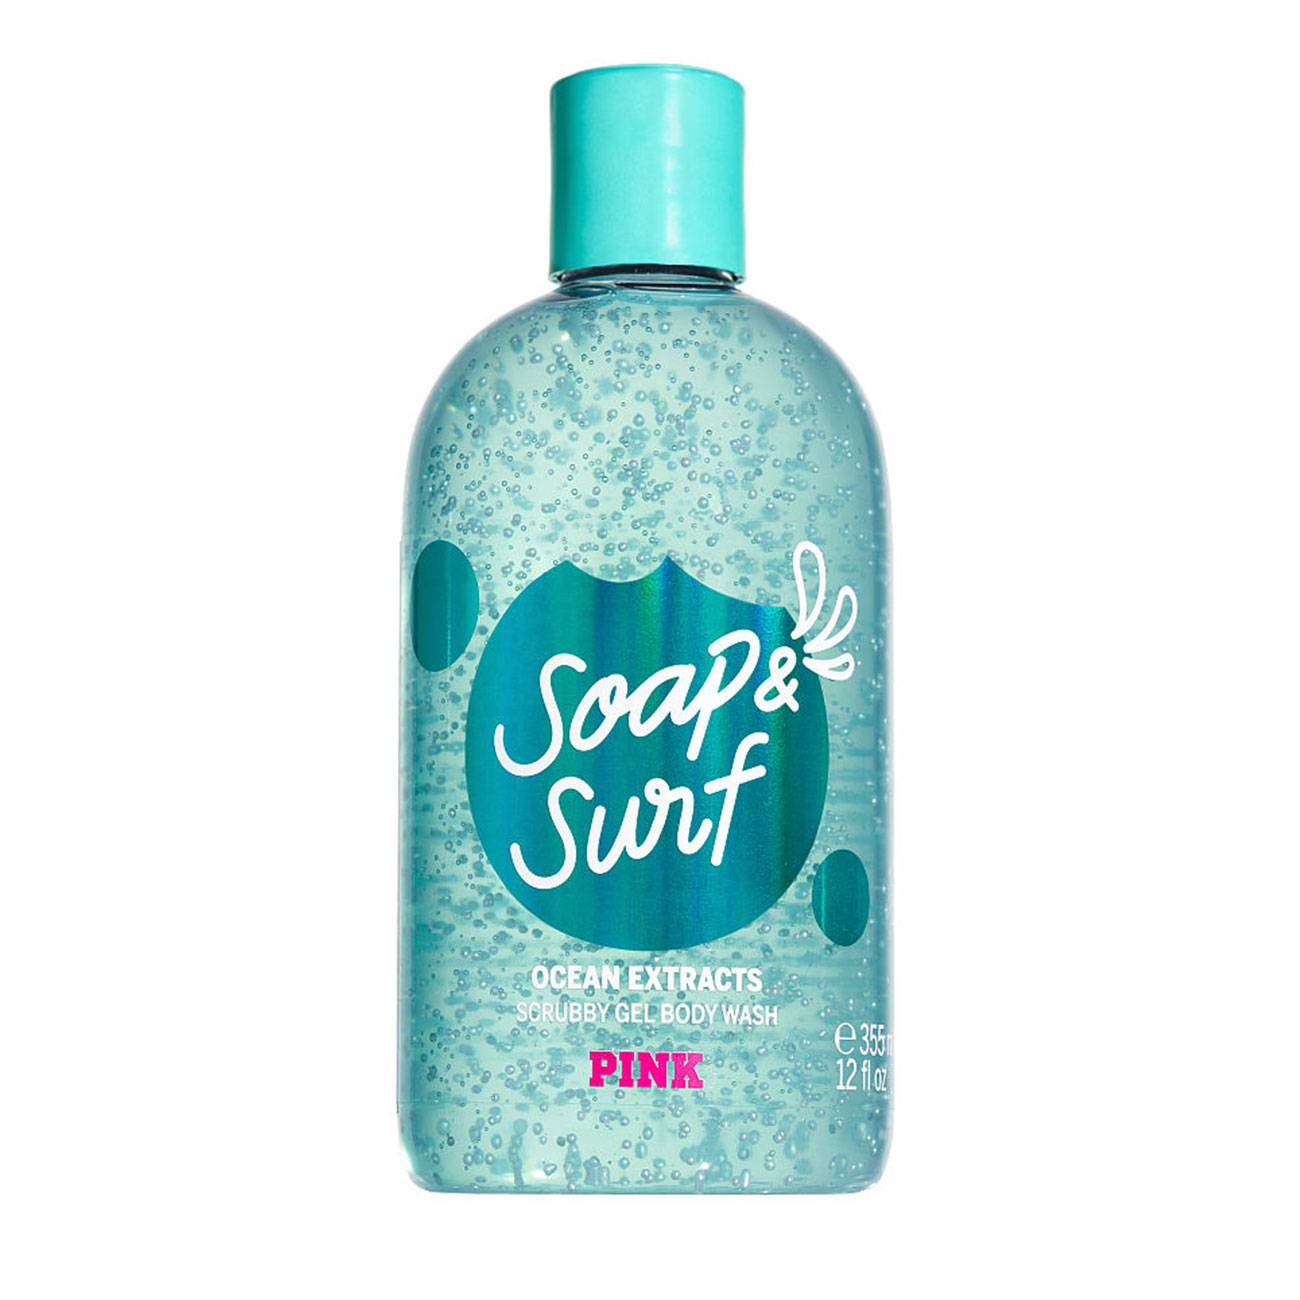 Set ingrijire corp Victoria's Secret Soap & Surf Scrubby Gel Body Wash 355ml cu comanda online